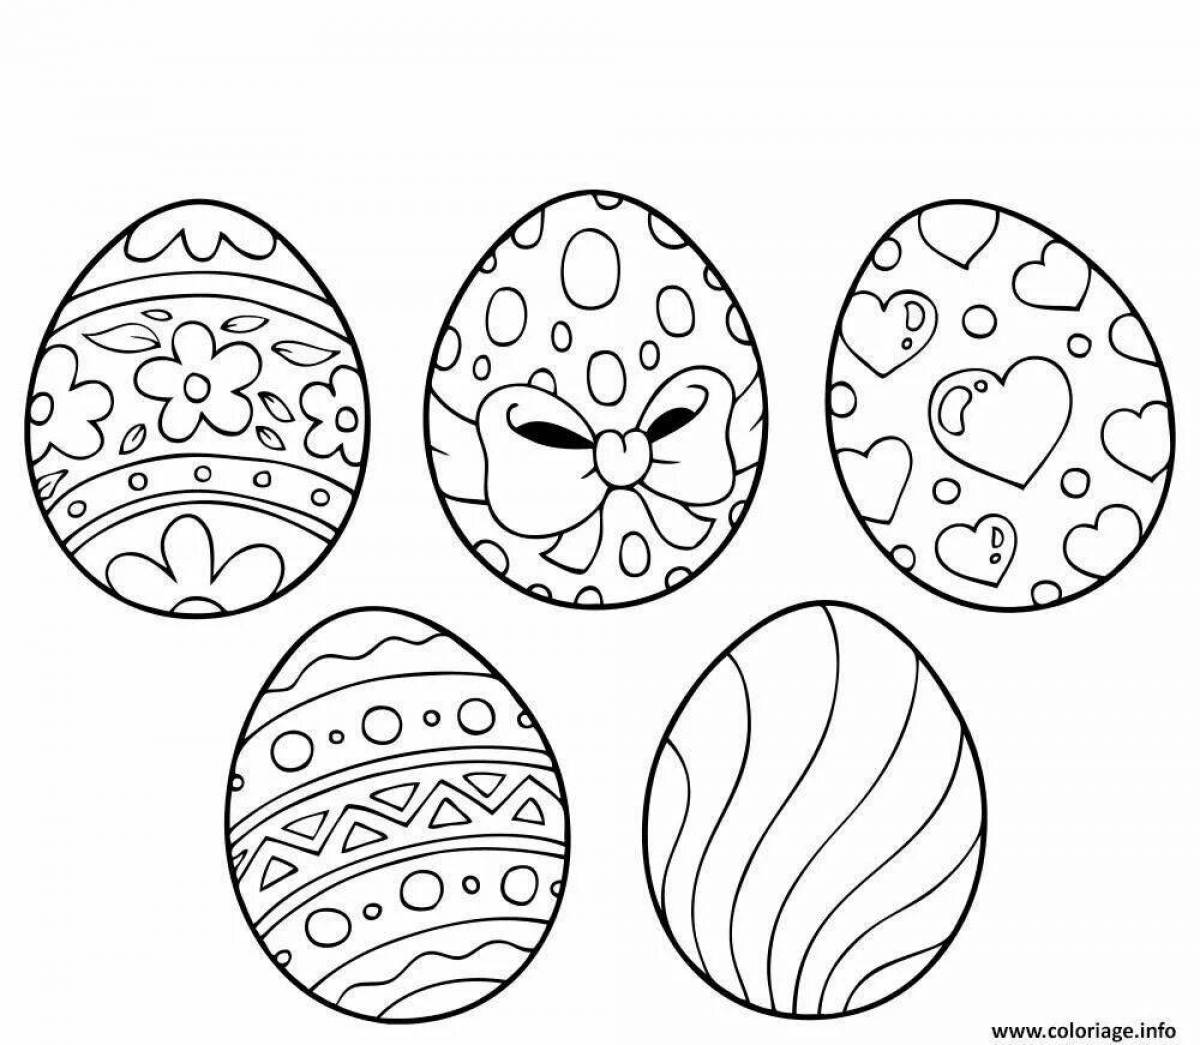 Kinder egg fun coloring